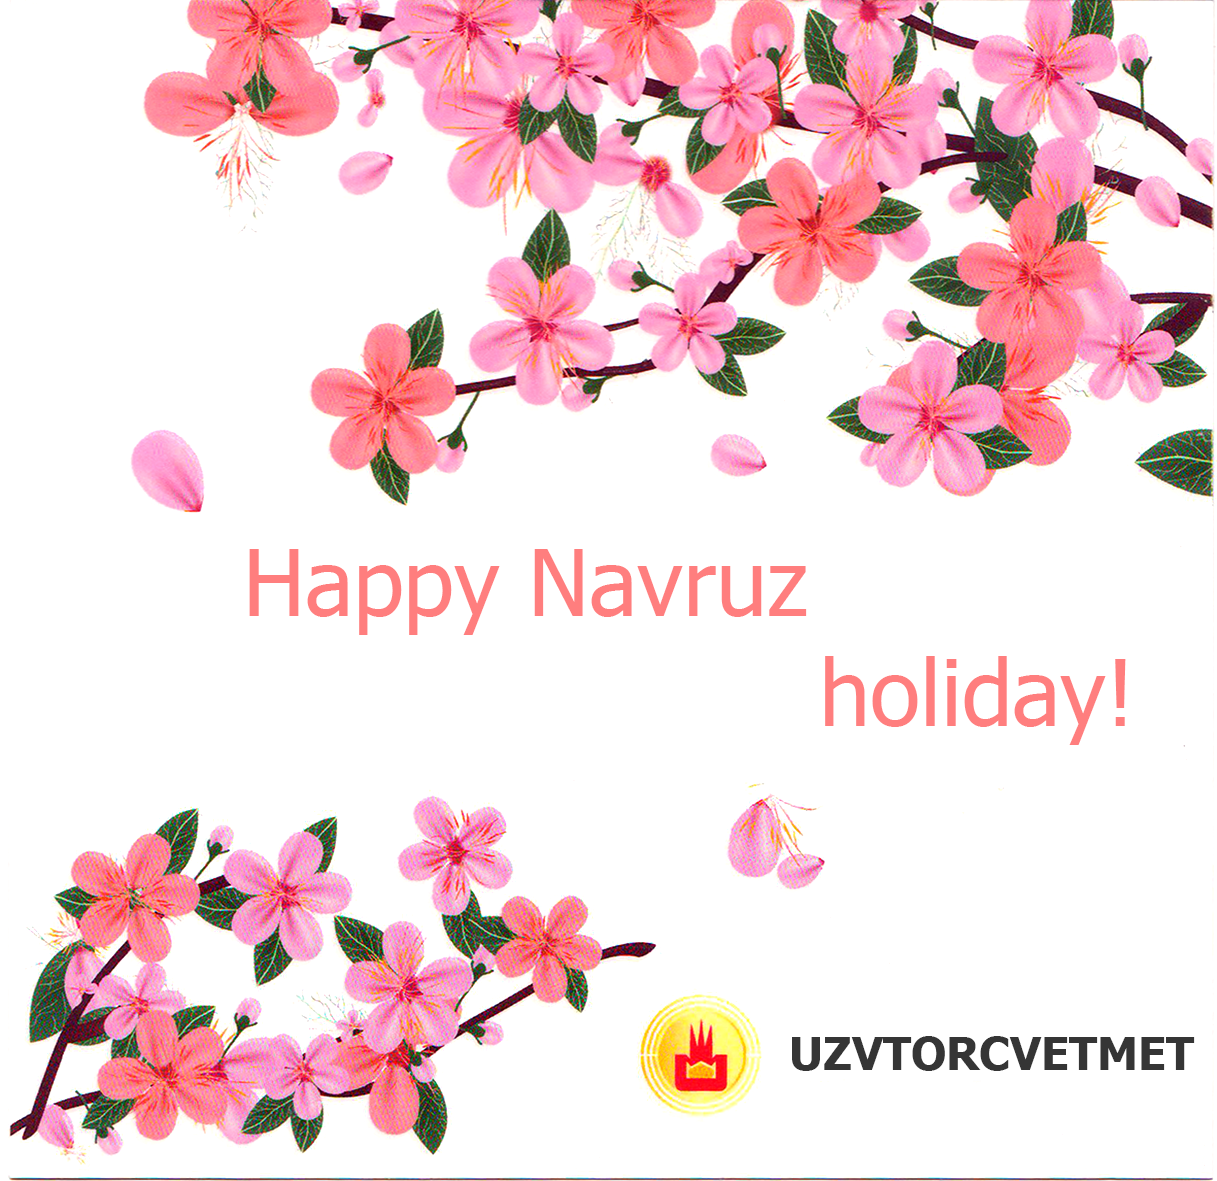 Happy Navruz holiday